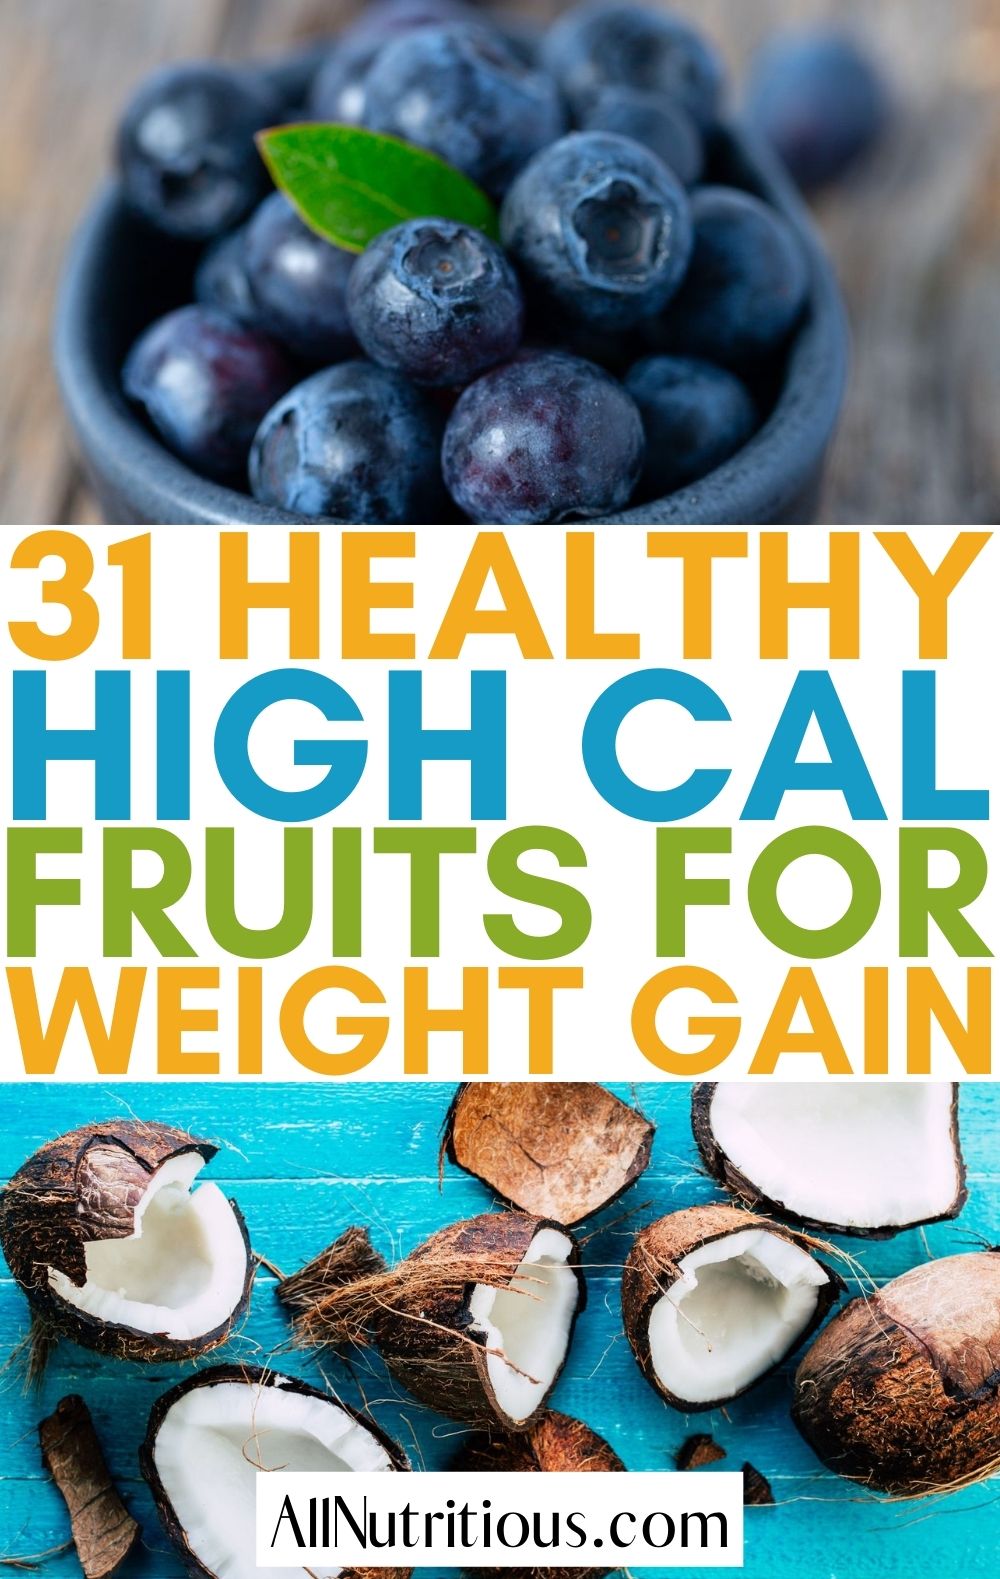 high calorie fruits